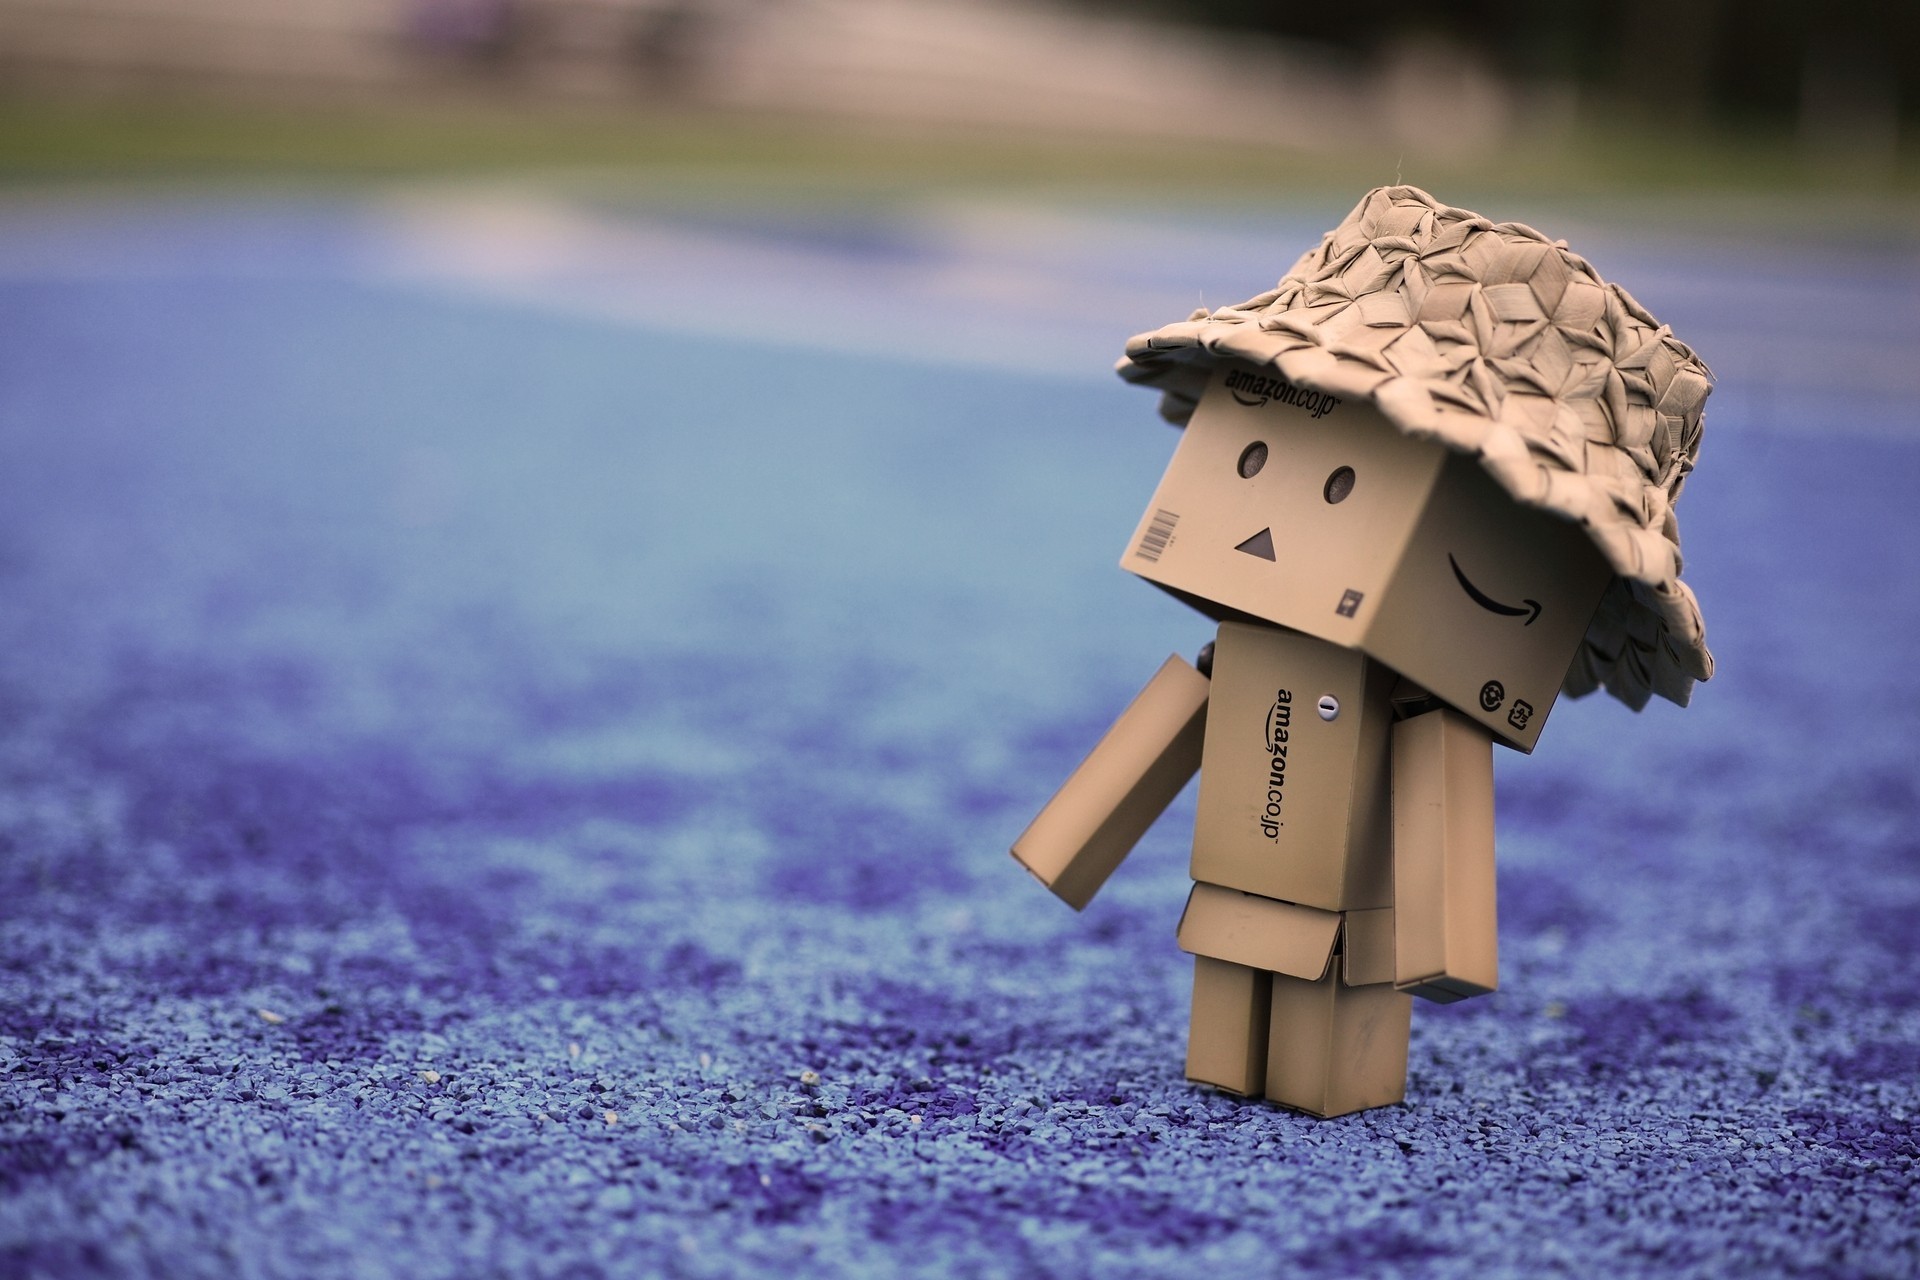 stroll, cardboard robot, miscellanea, miscellaneous, danbo, hat